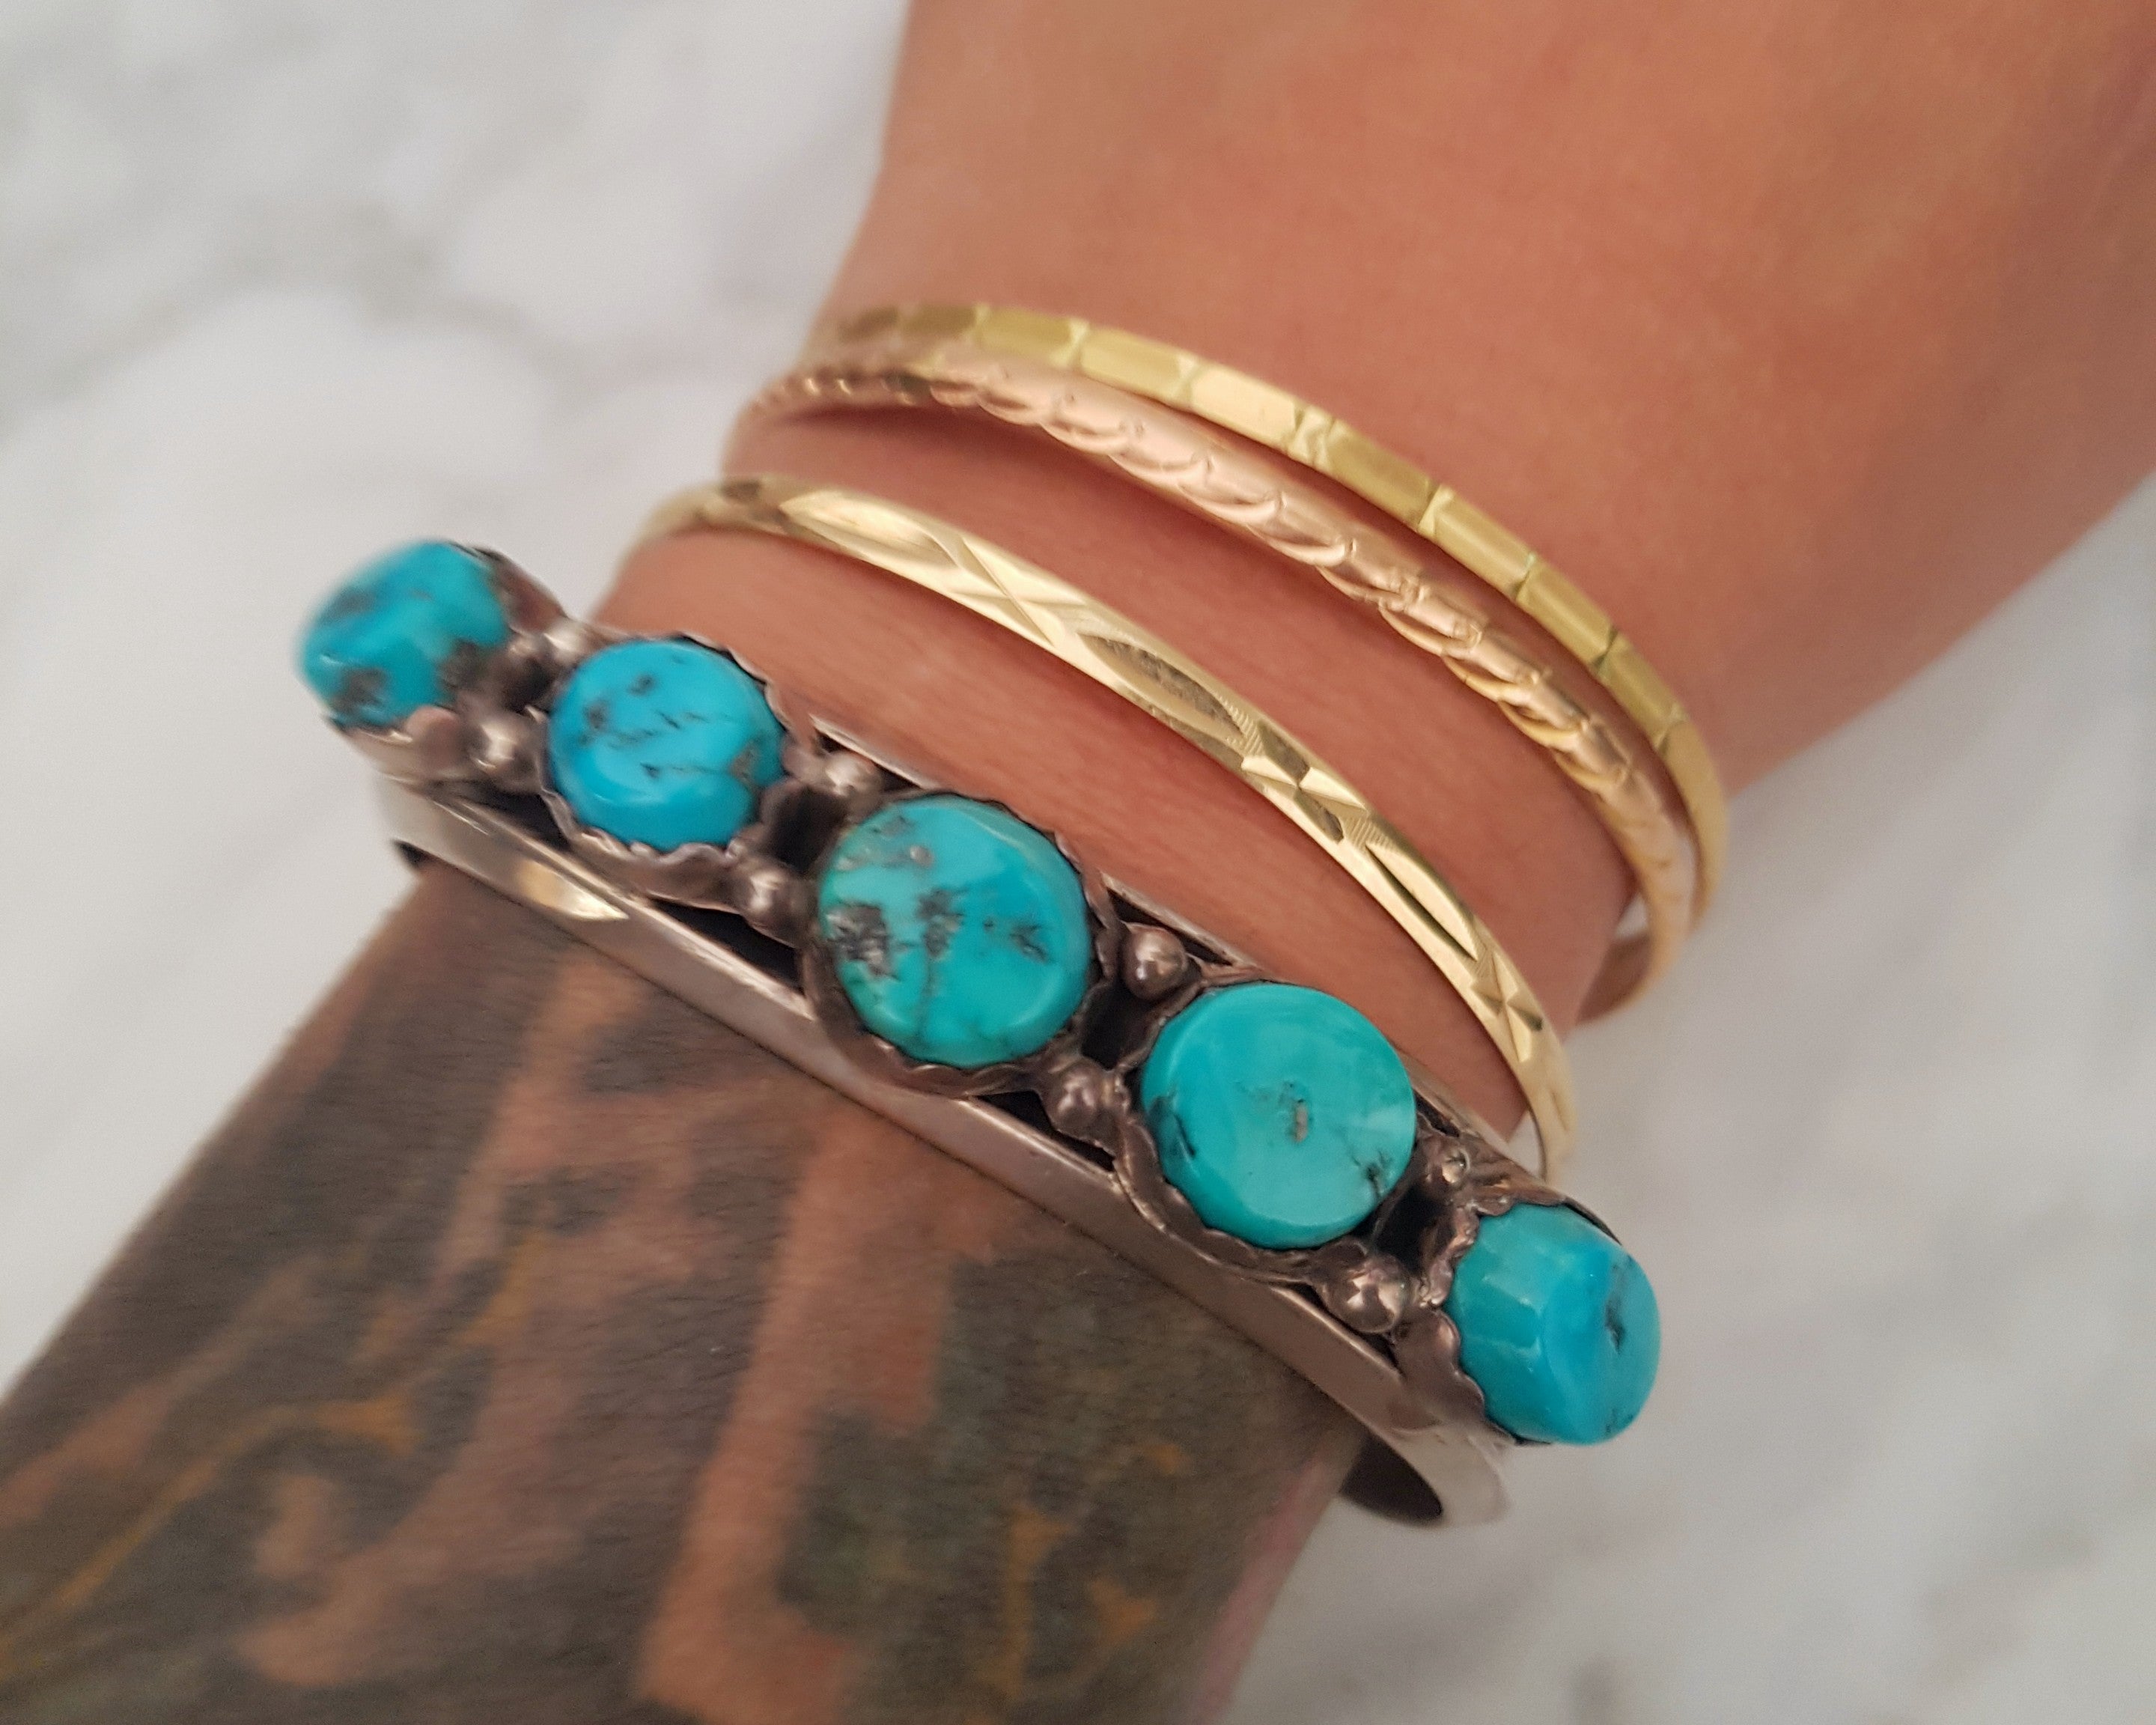 Native American Turquoise Bracelet - Signed L Sheka